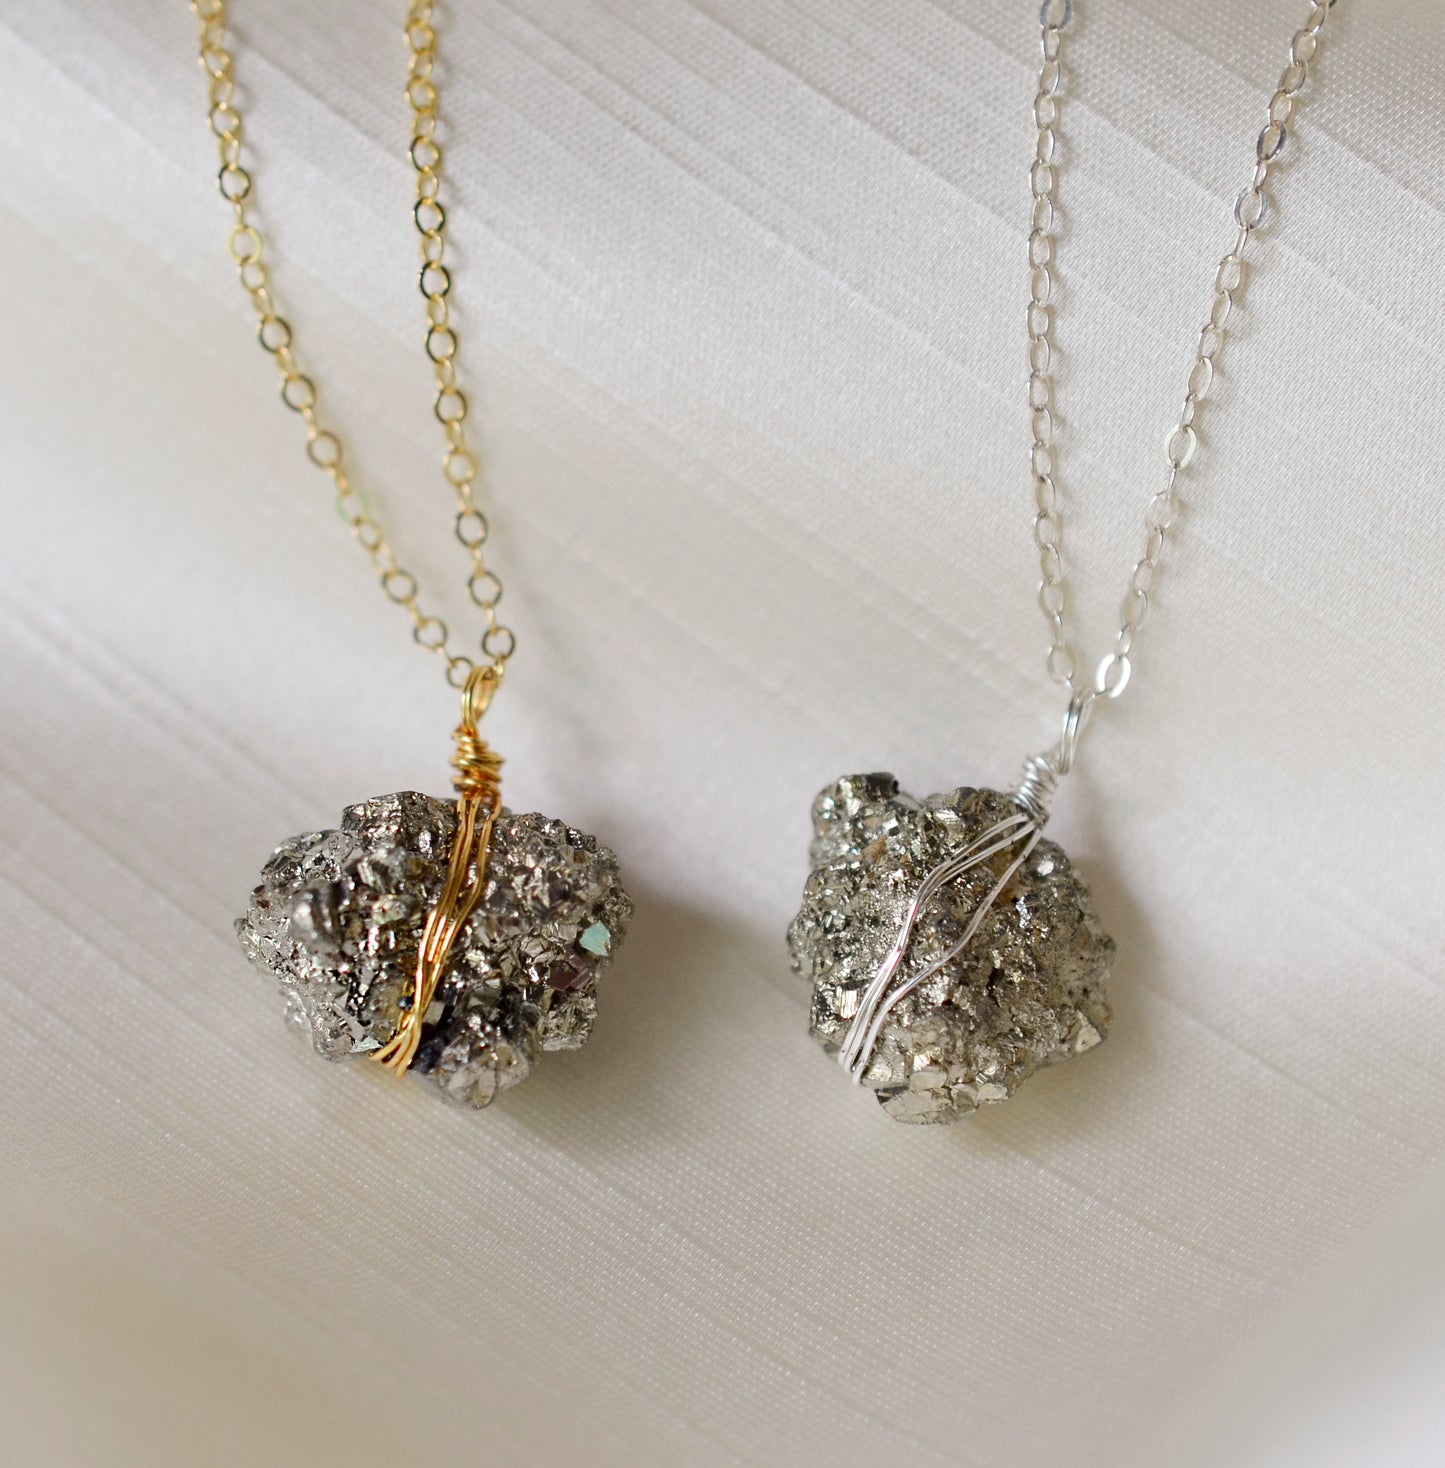 Pyrite Cluster Necklace, Sterling Silver or 14k Gold Filled